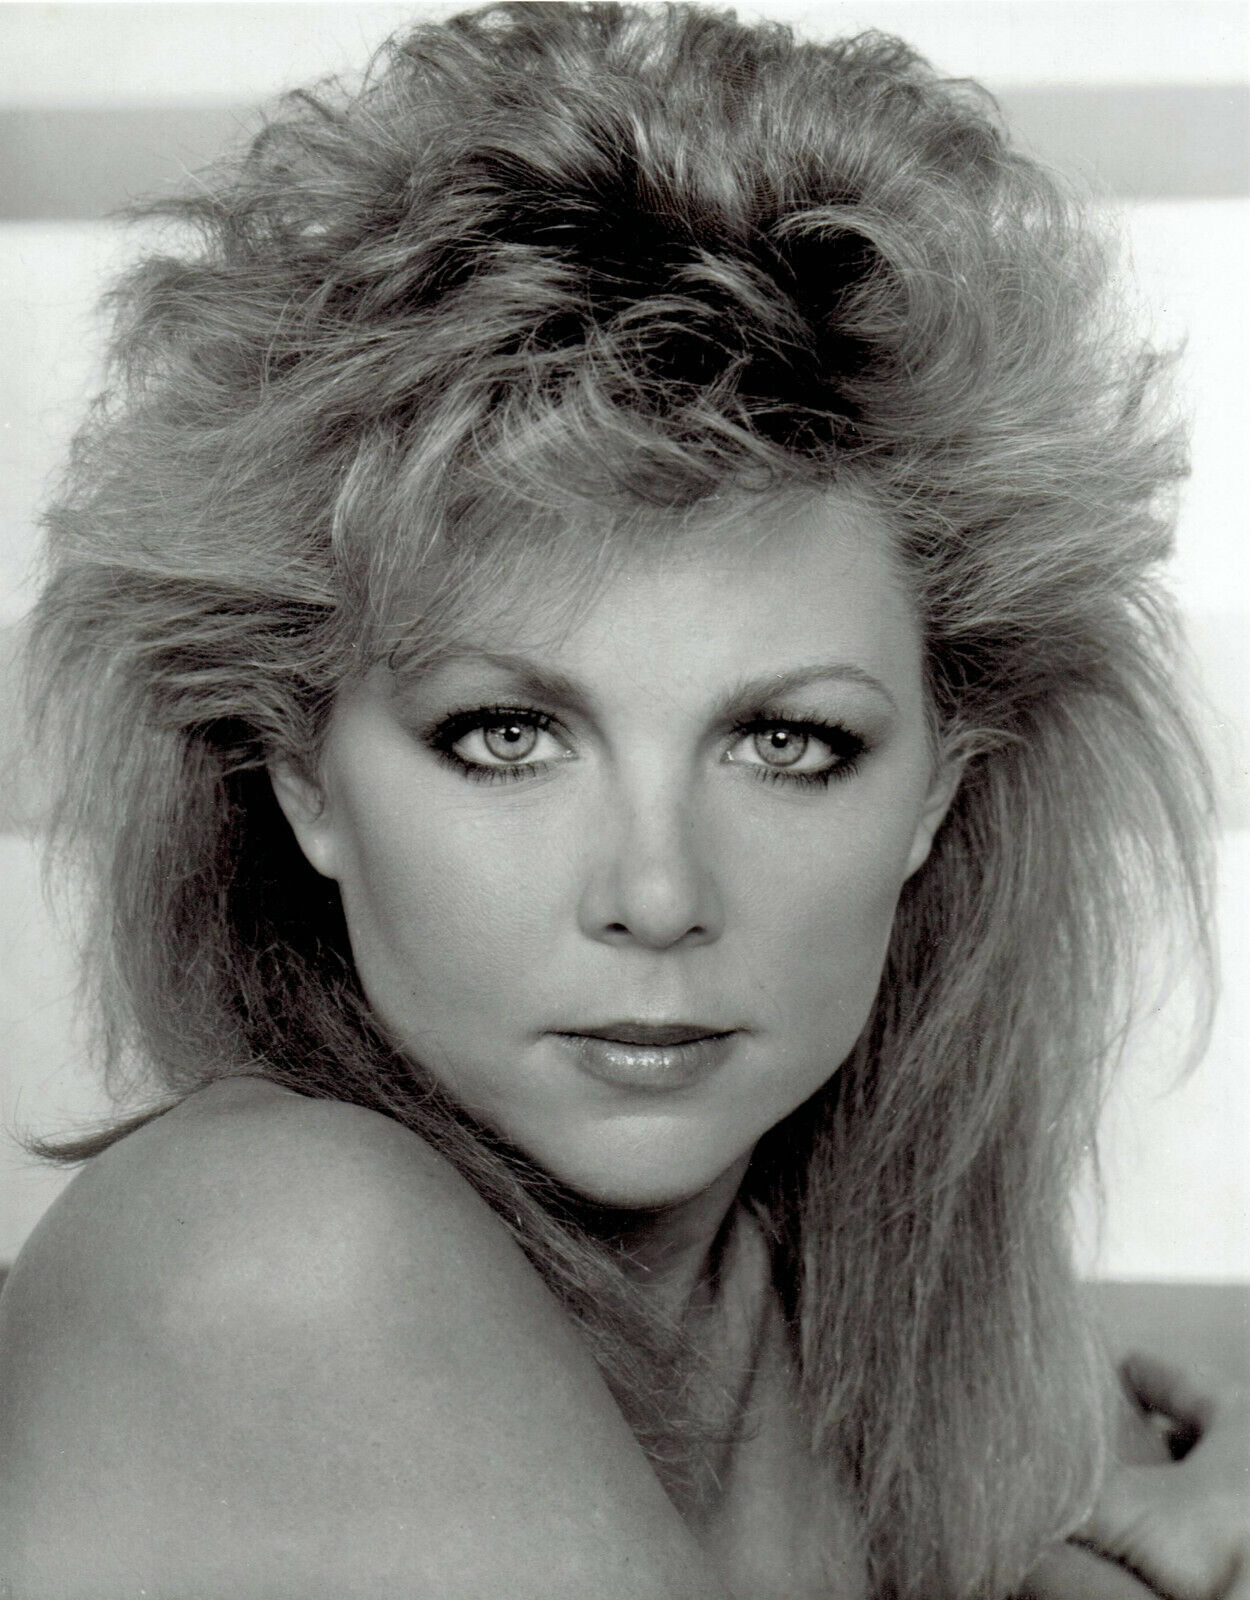 1983 Press Photo Actress Lisa Hartman poses for Studio Portrait 